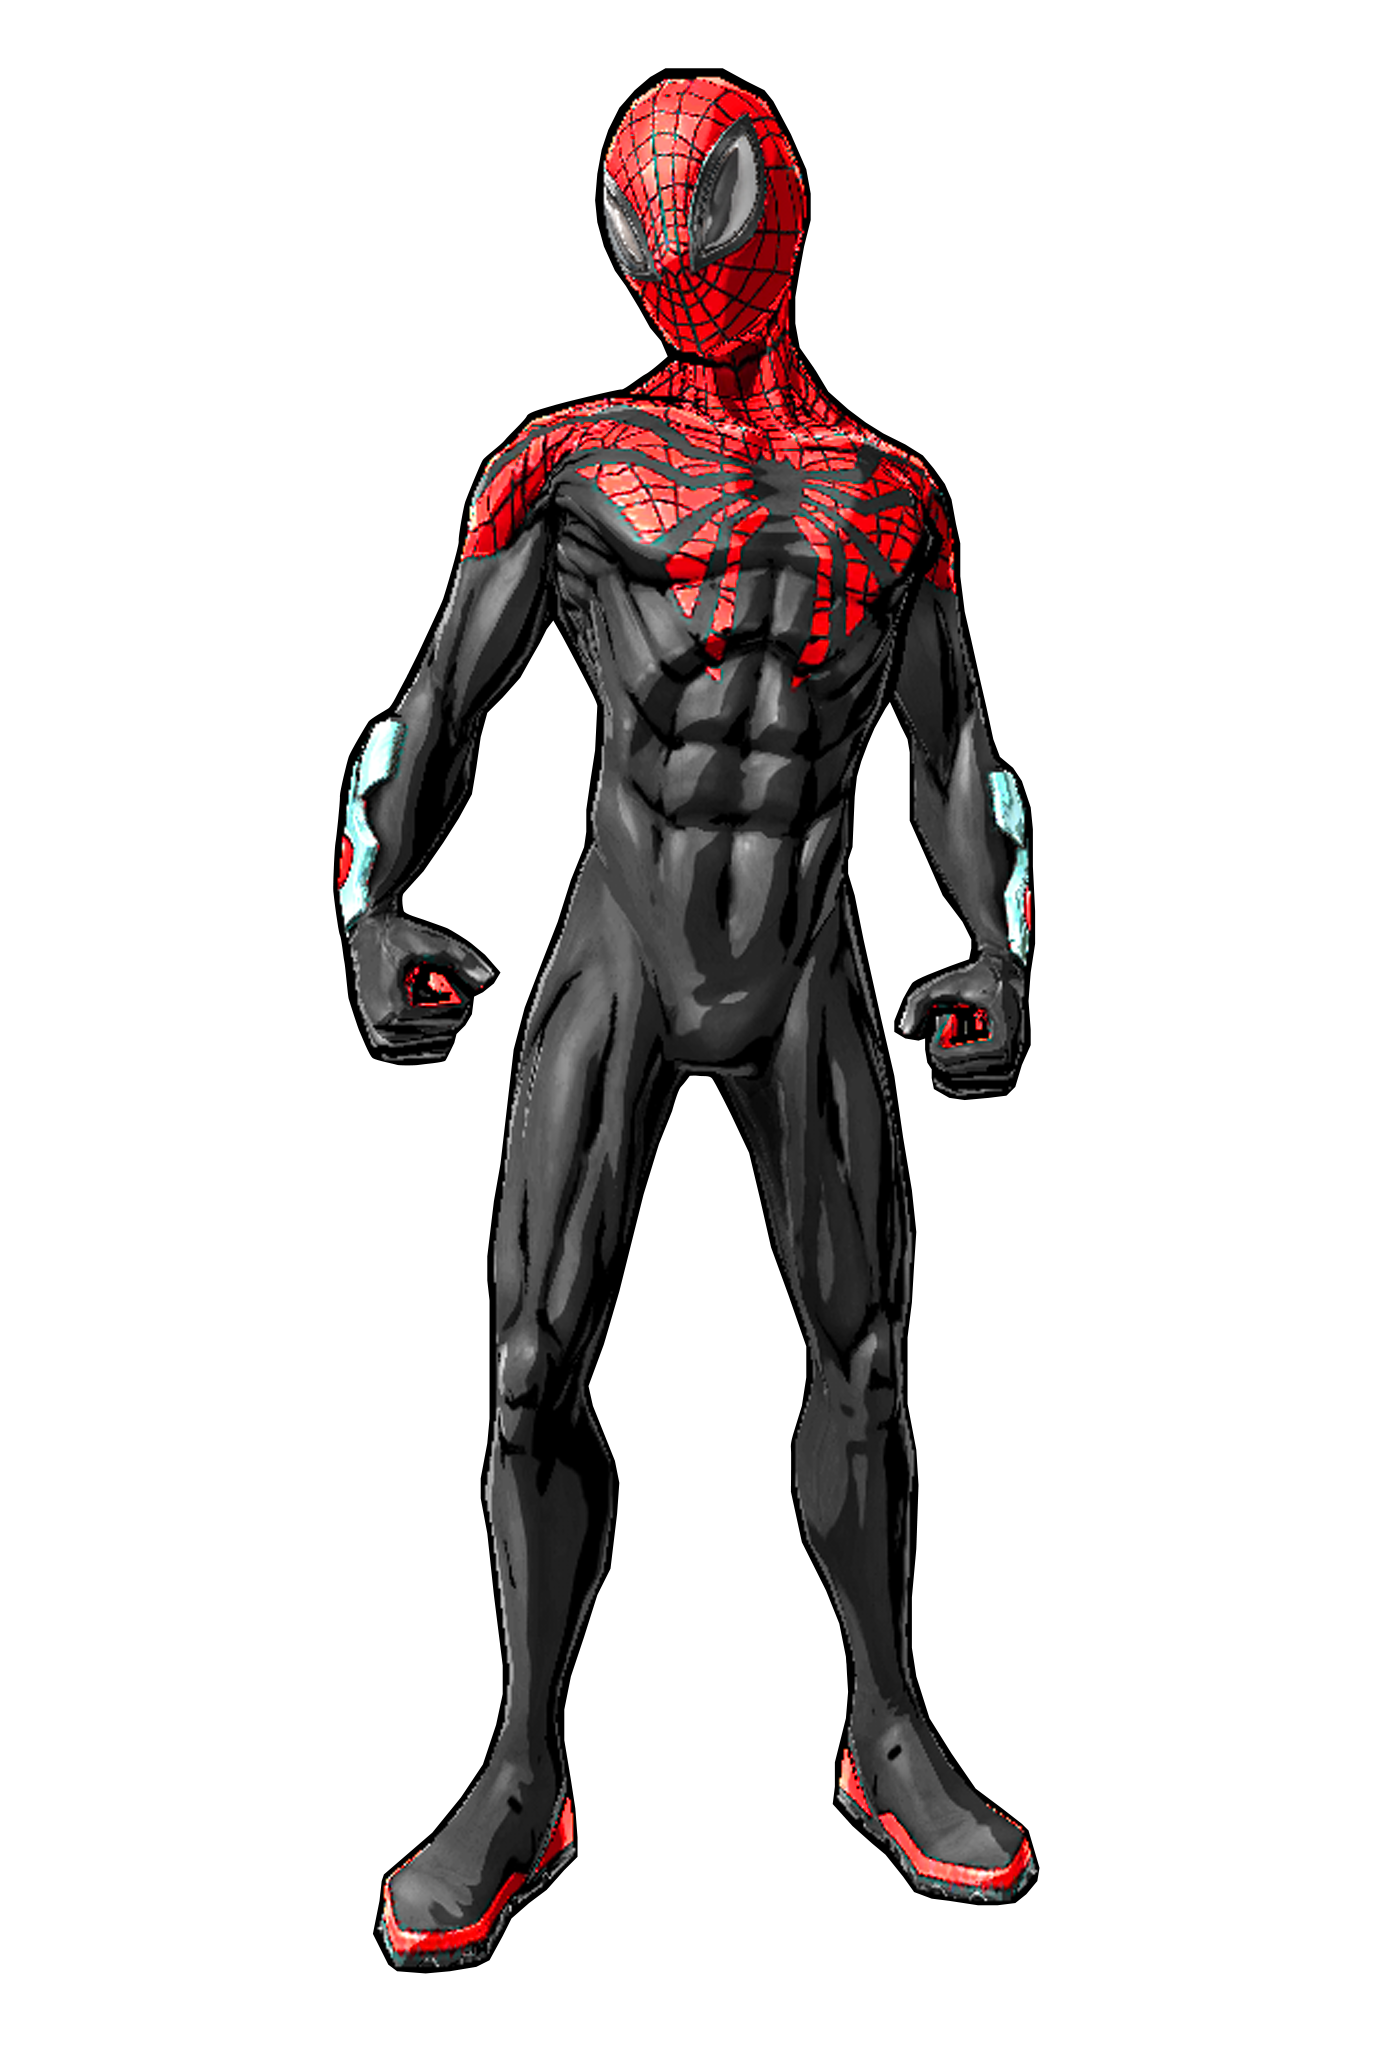 Spider-Man Standing Descargar imagen PNG Transparente